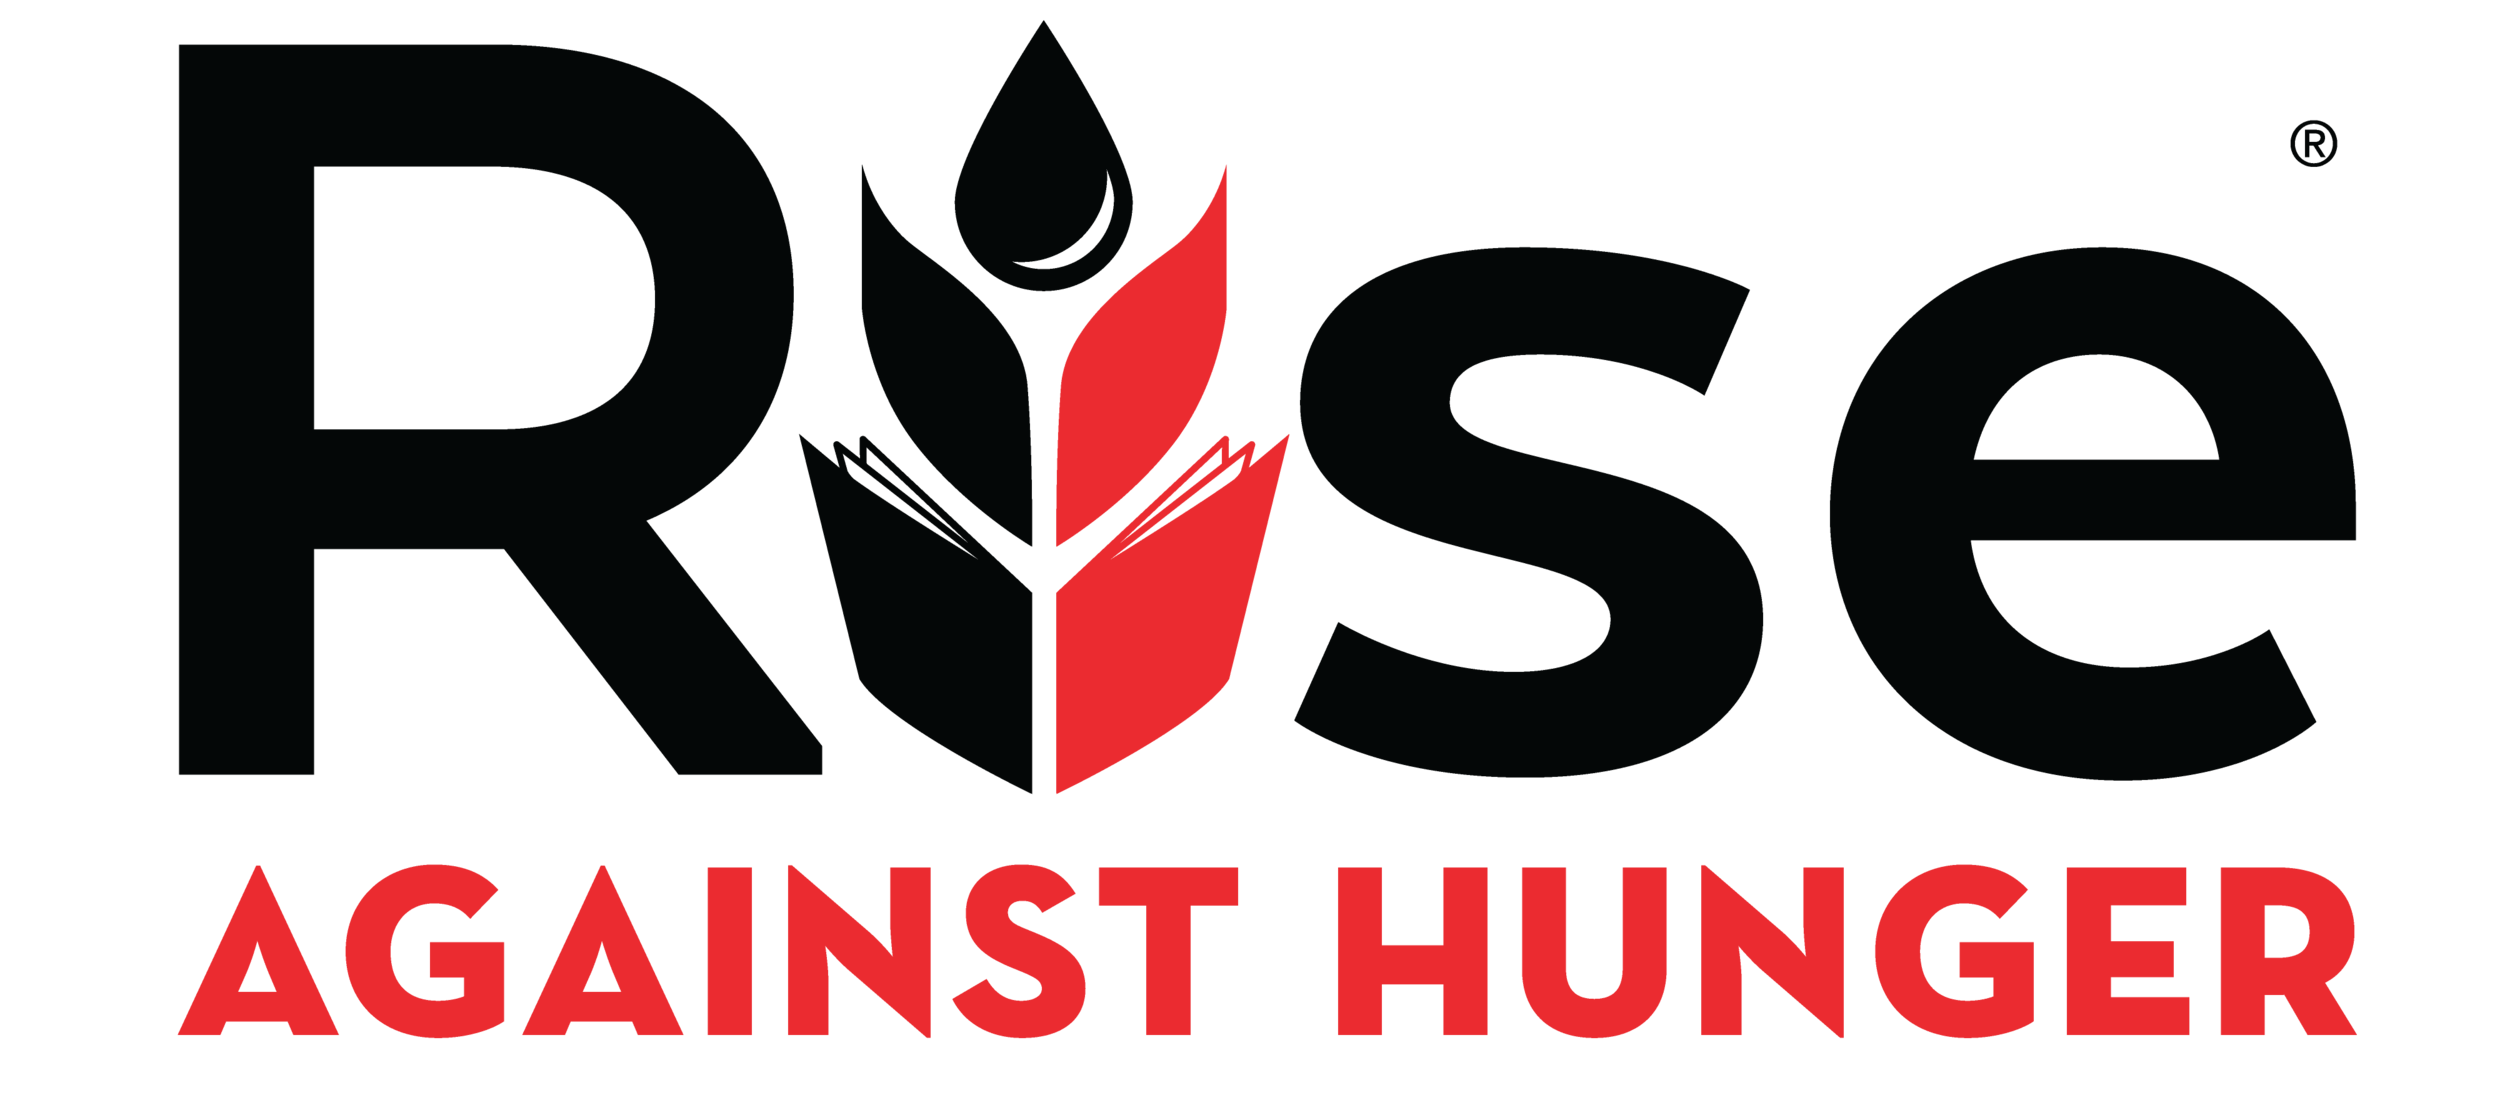 Rise-Against-Hunger-Logo.png